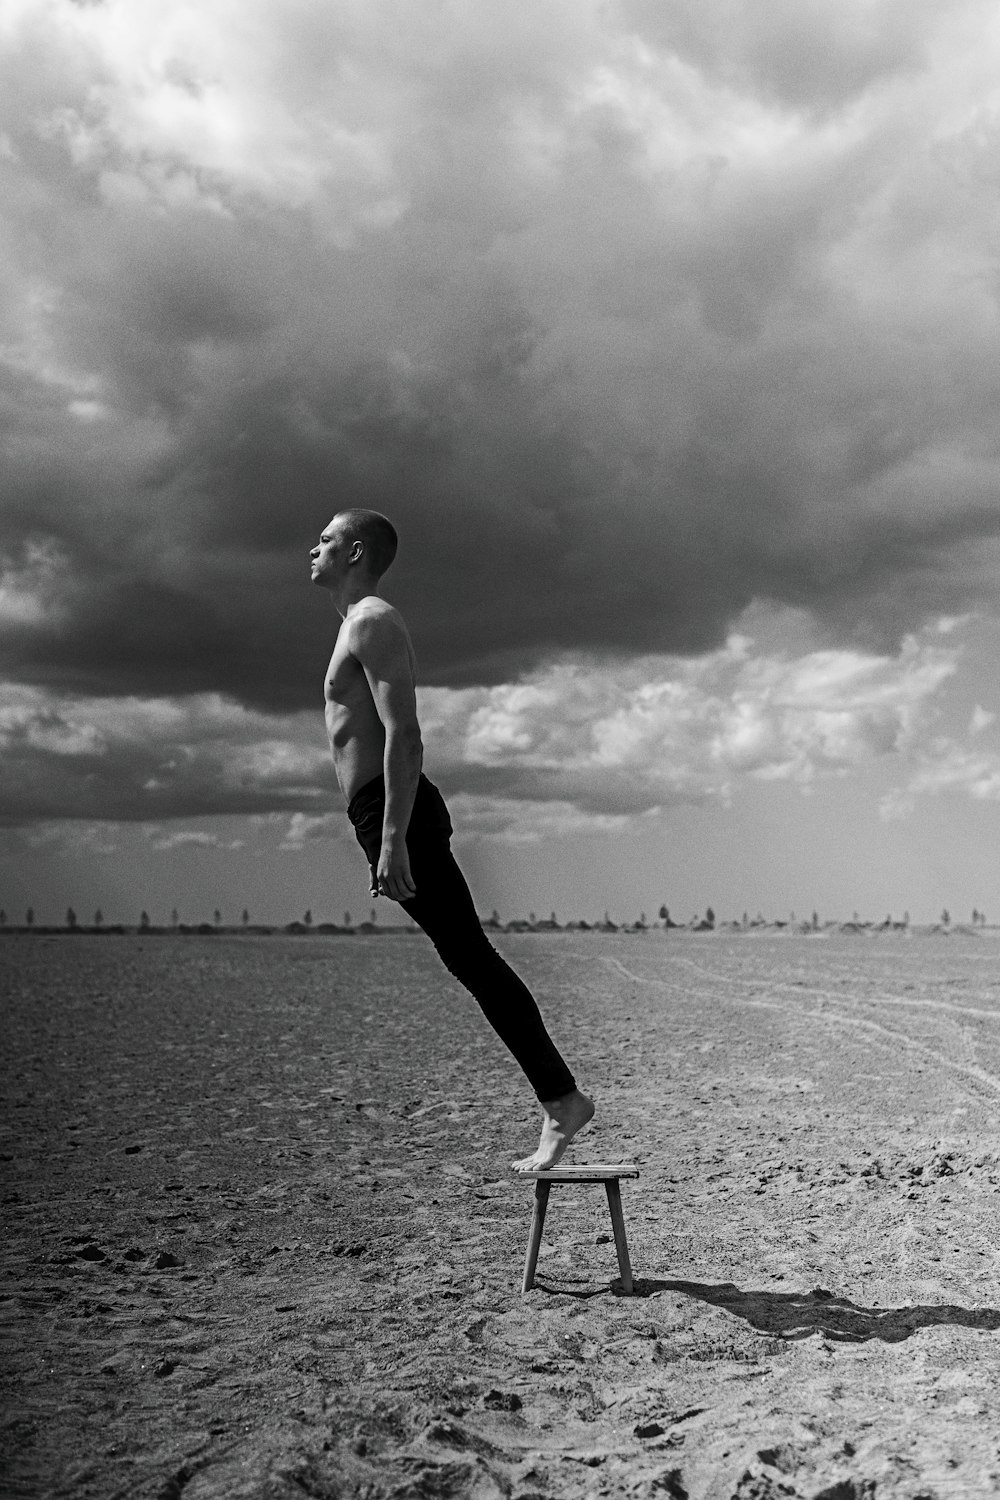 a man standing on a stool on a beach